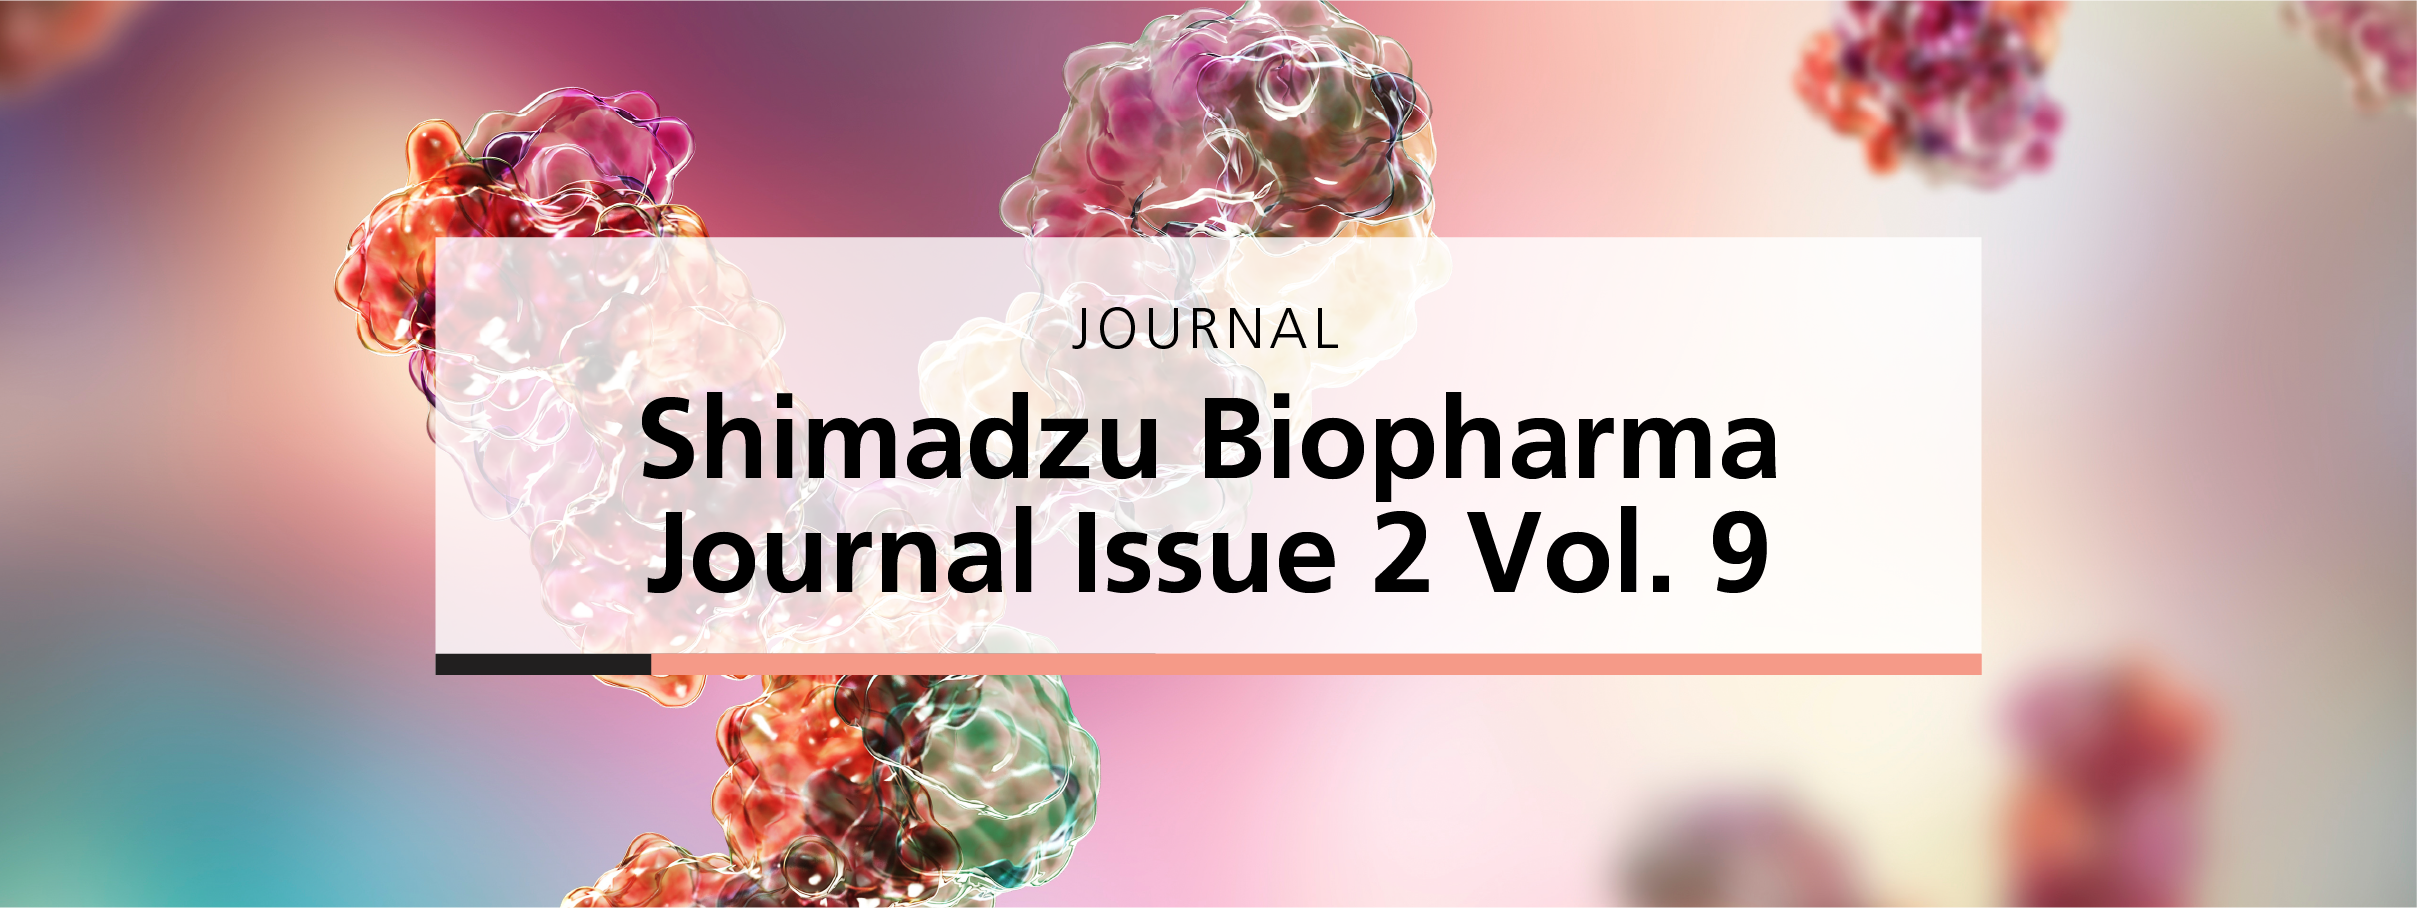 Shimadzu Biopharma Journal Issue 2 Vol. 9